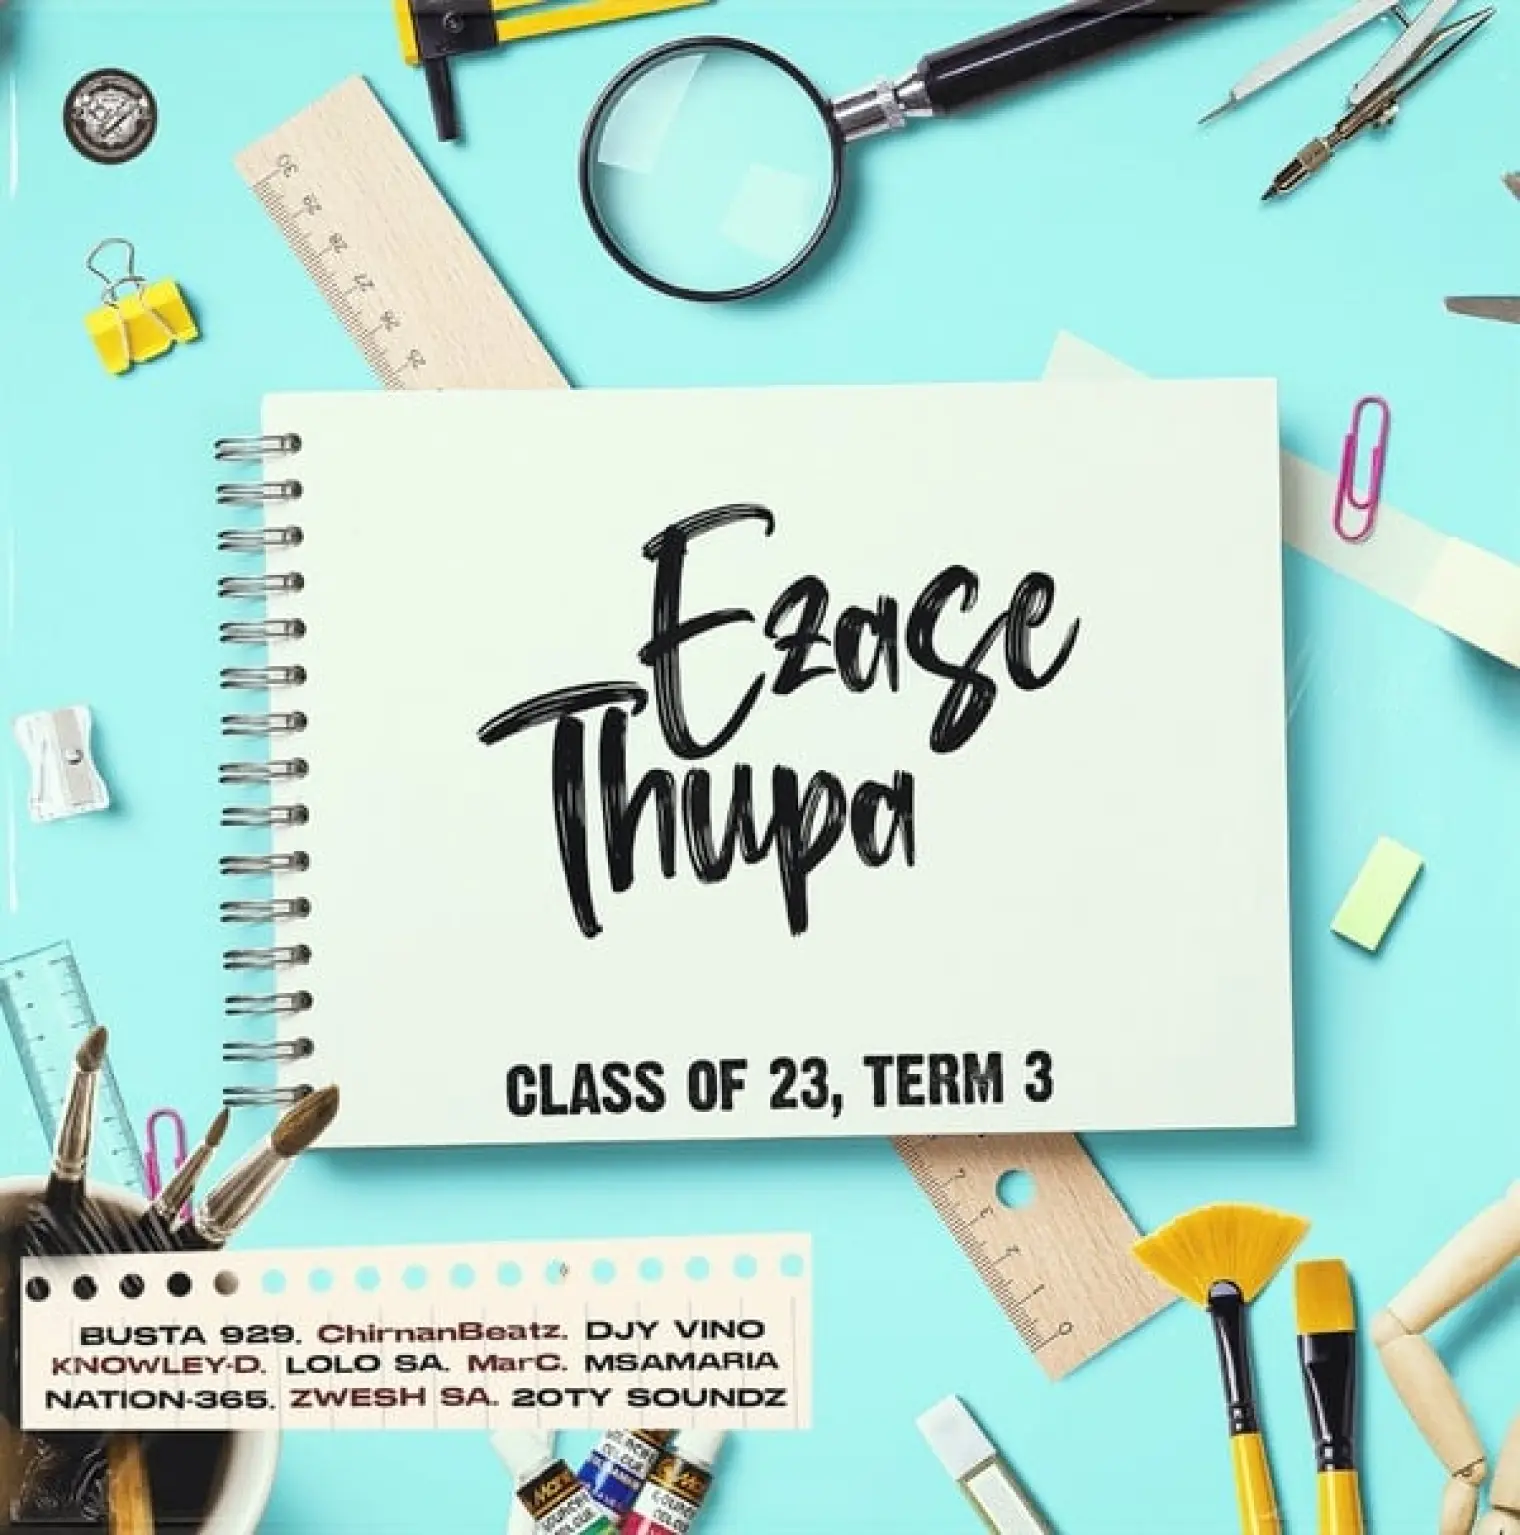 Class of 23, term 3 -  Ezase Thupa 